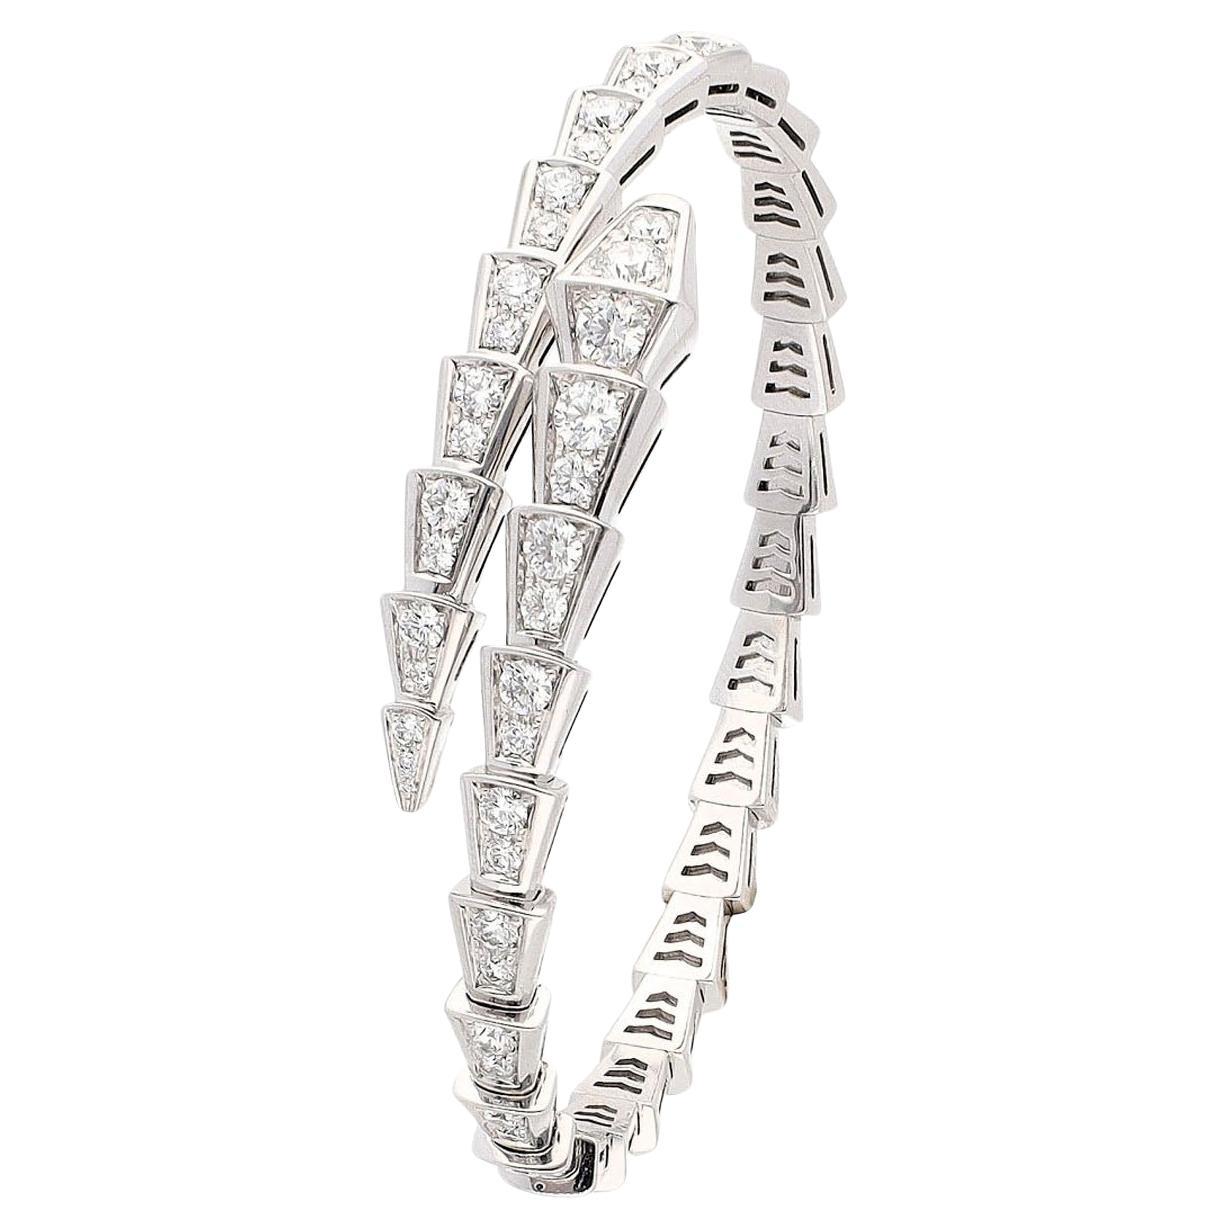 Bvlgari Serpenti Bracelet/Wristwatch Mother of Pearl and Diamond | Bvlgari  jewelry, Bvlgari serpenti bracelet, White gold bangle bracelets